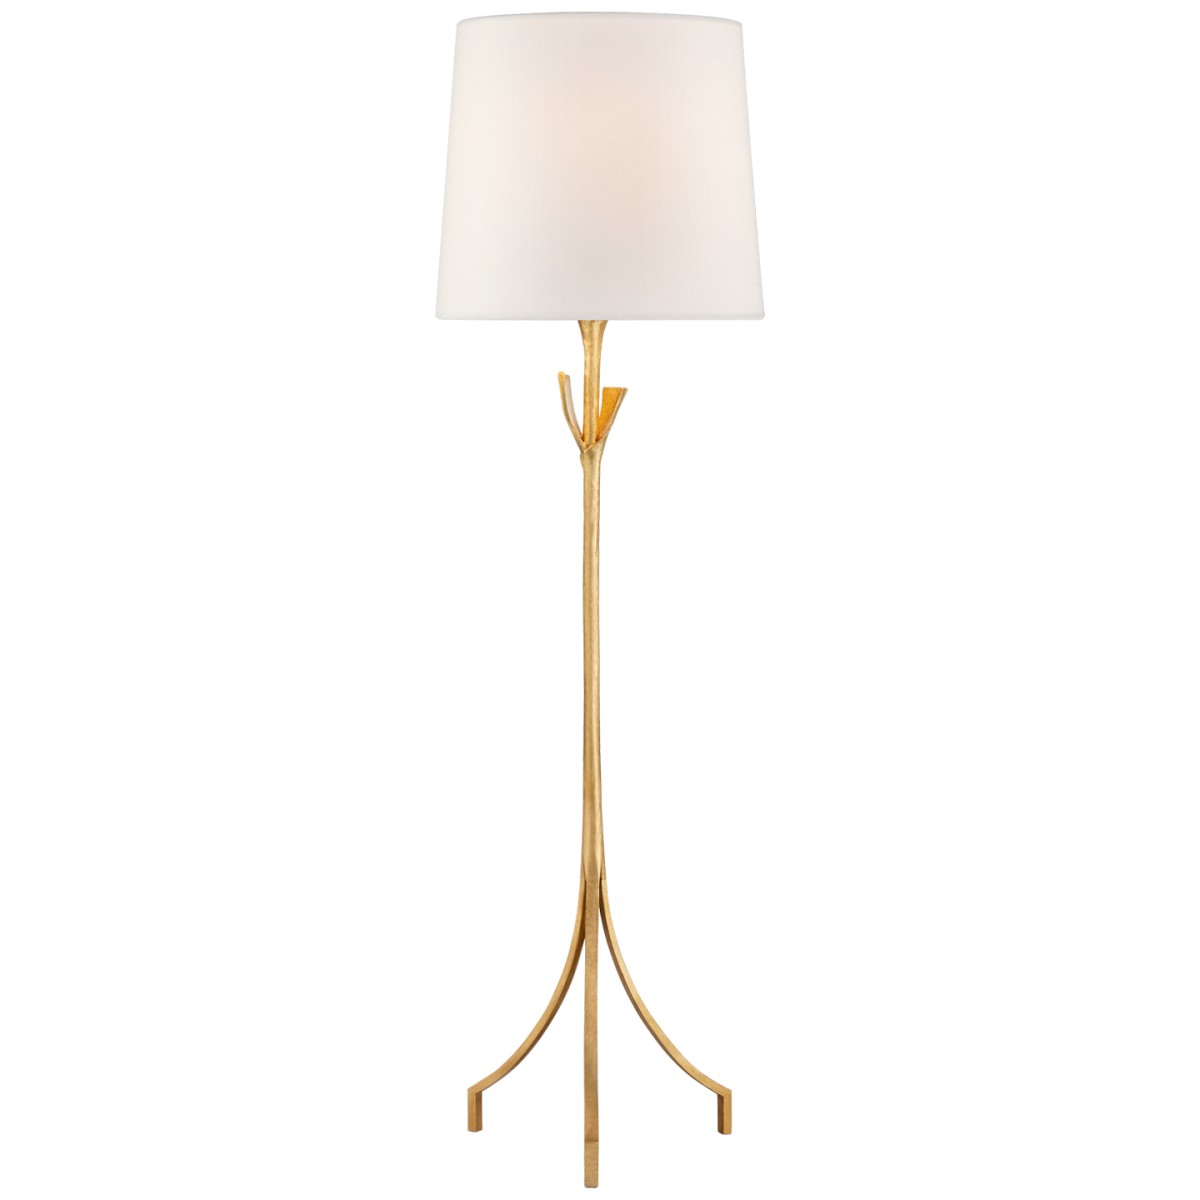 Fliana Floor Lamp with Linen Shade